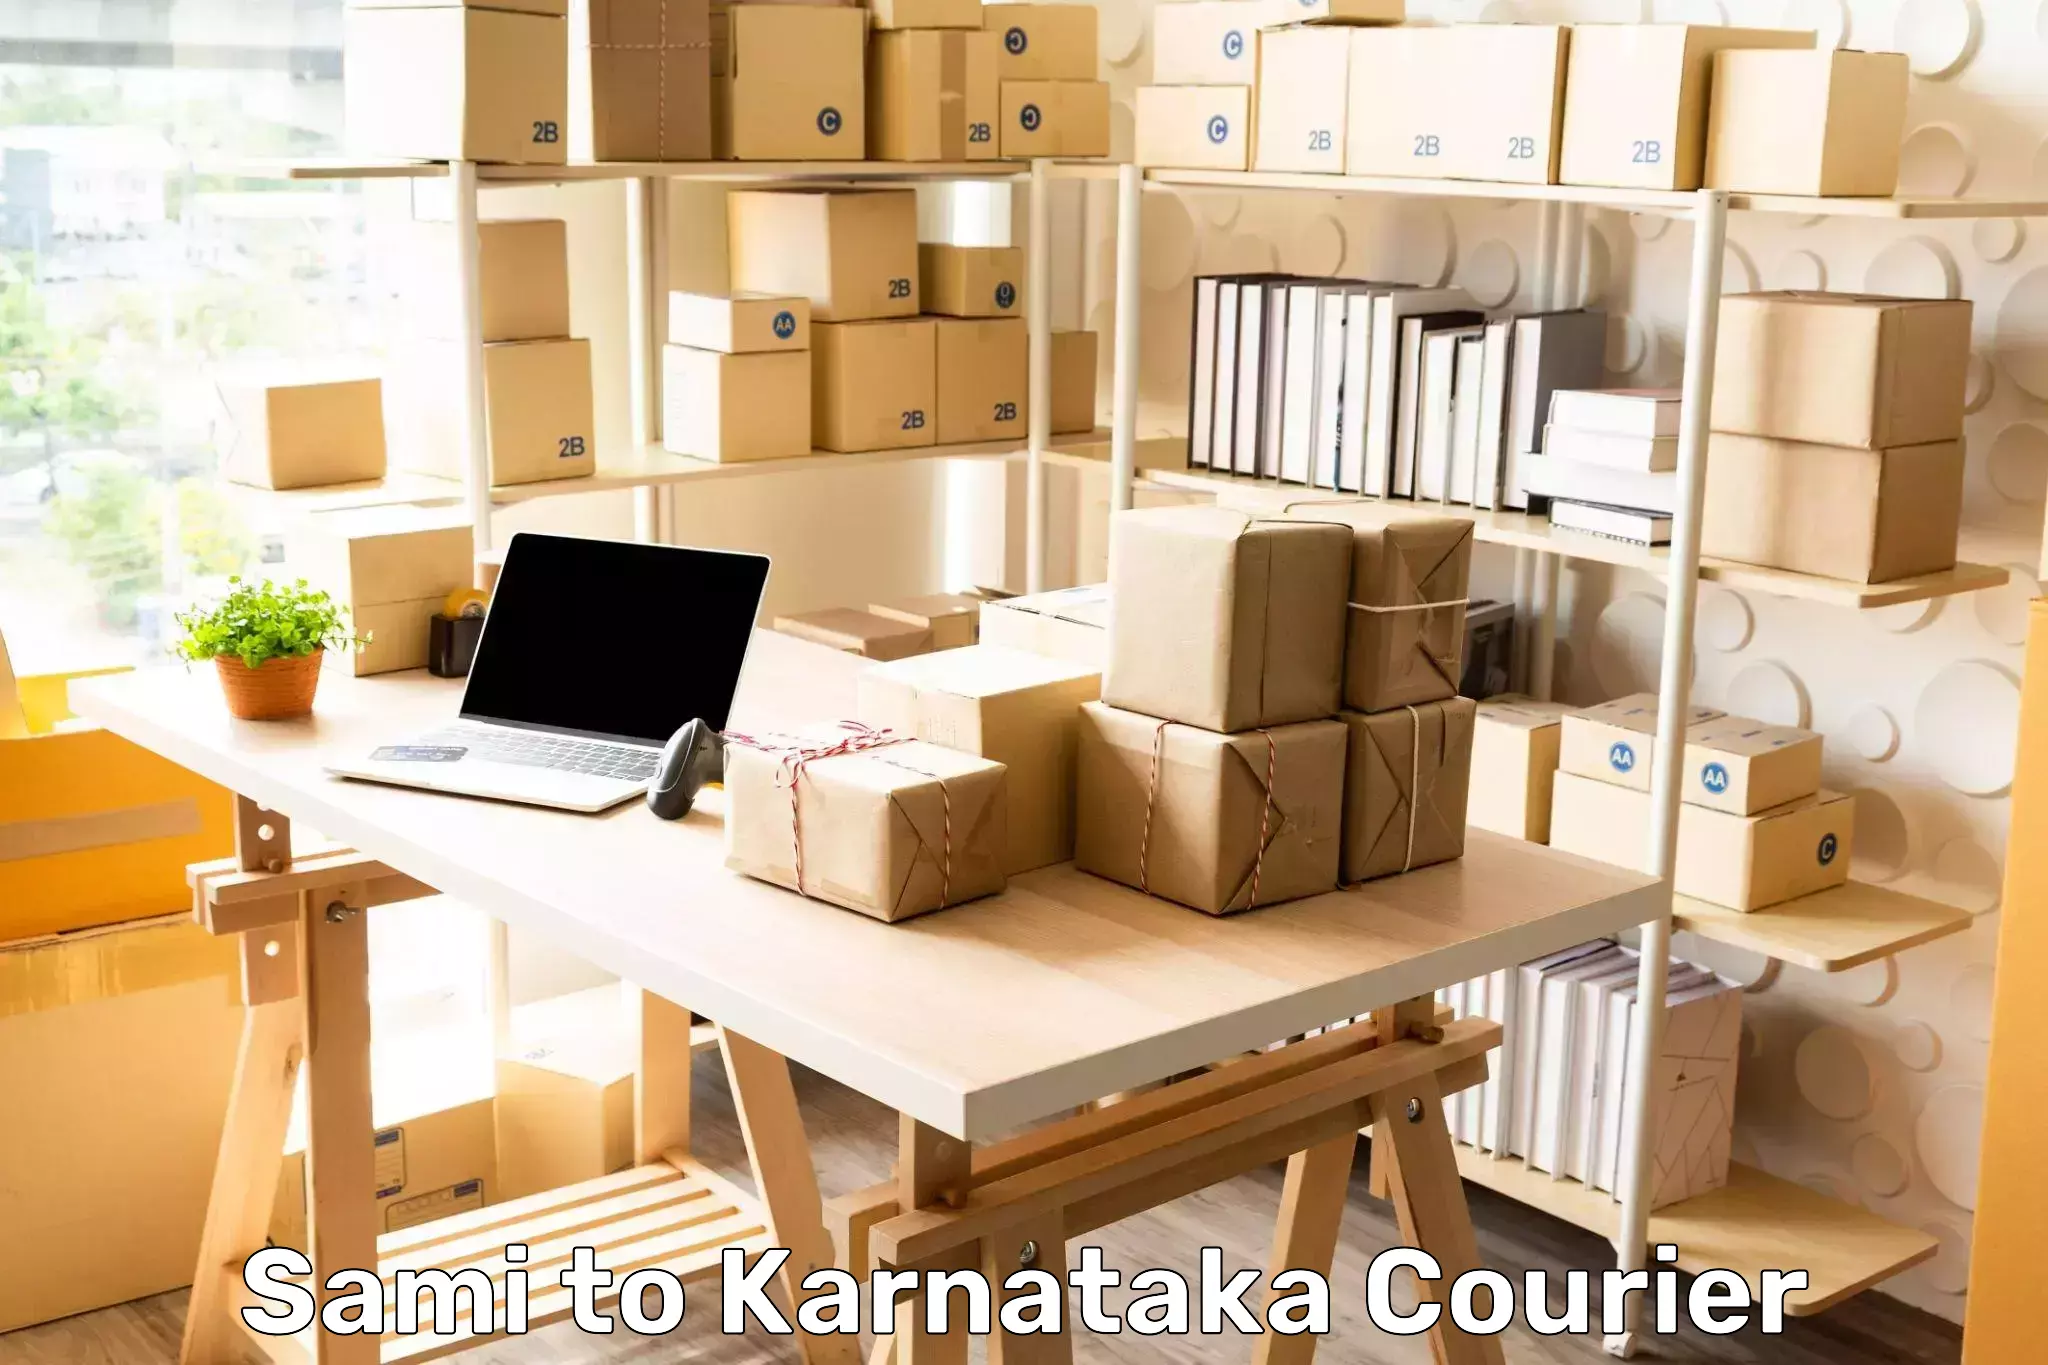 Overnight delivery services Sami to Karnataka